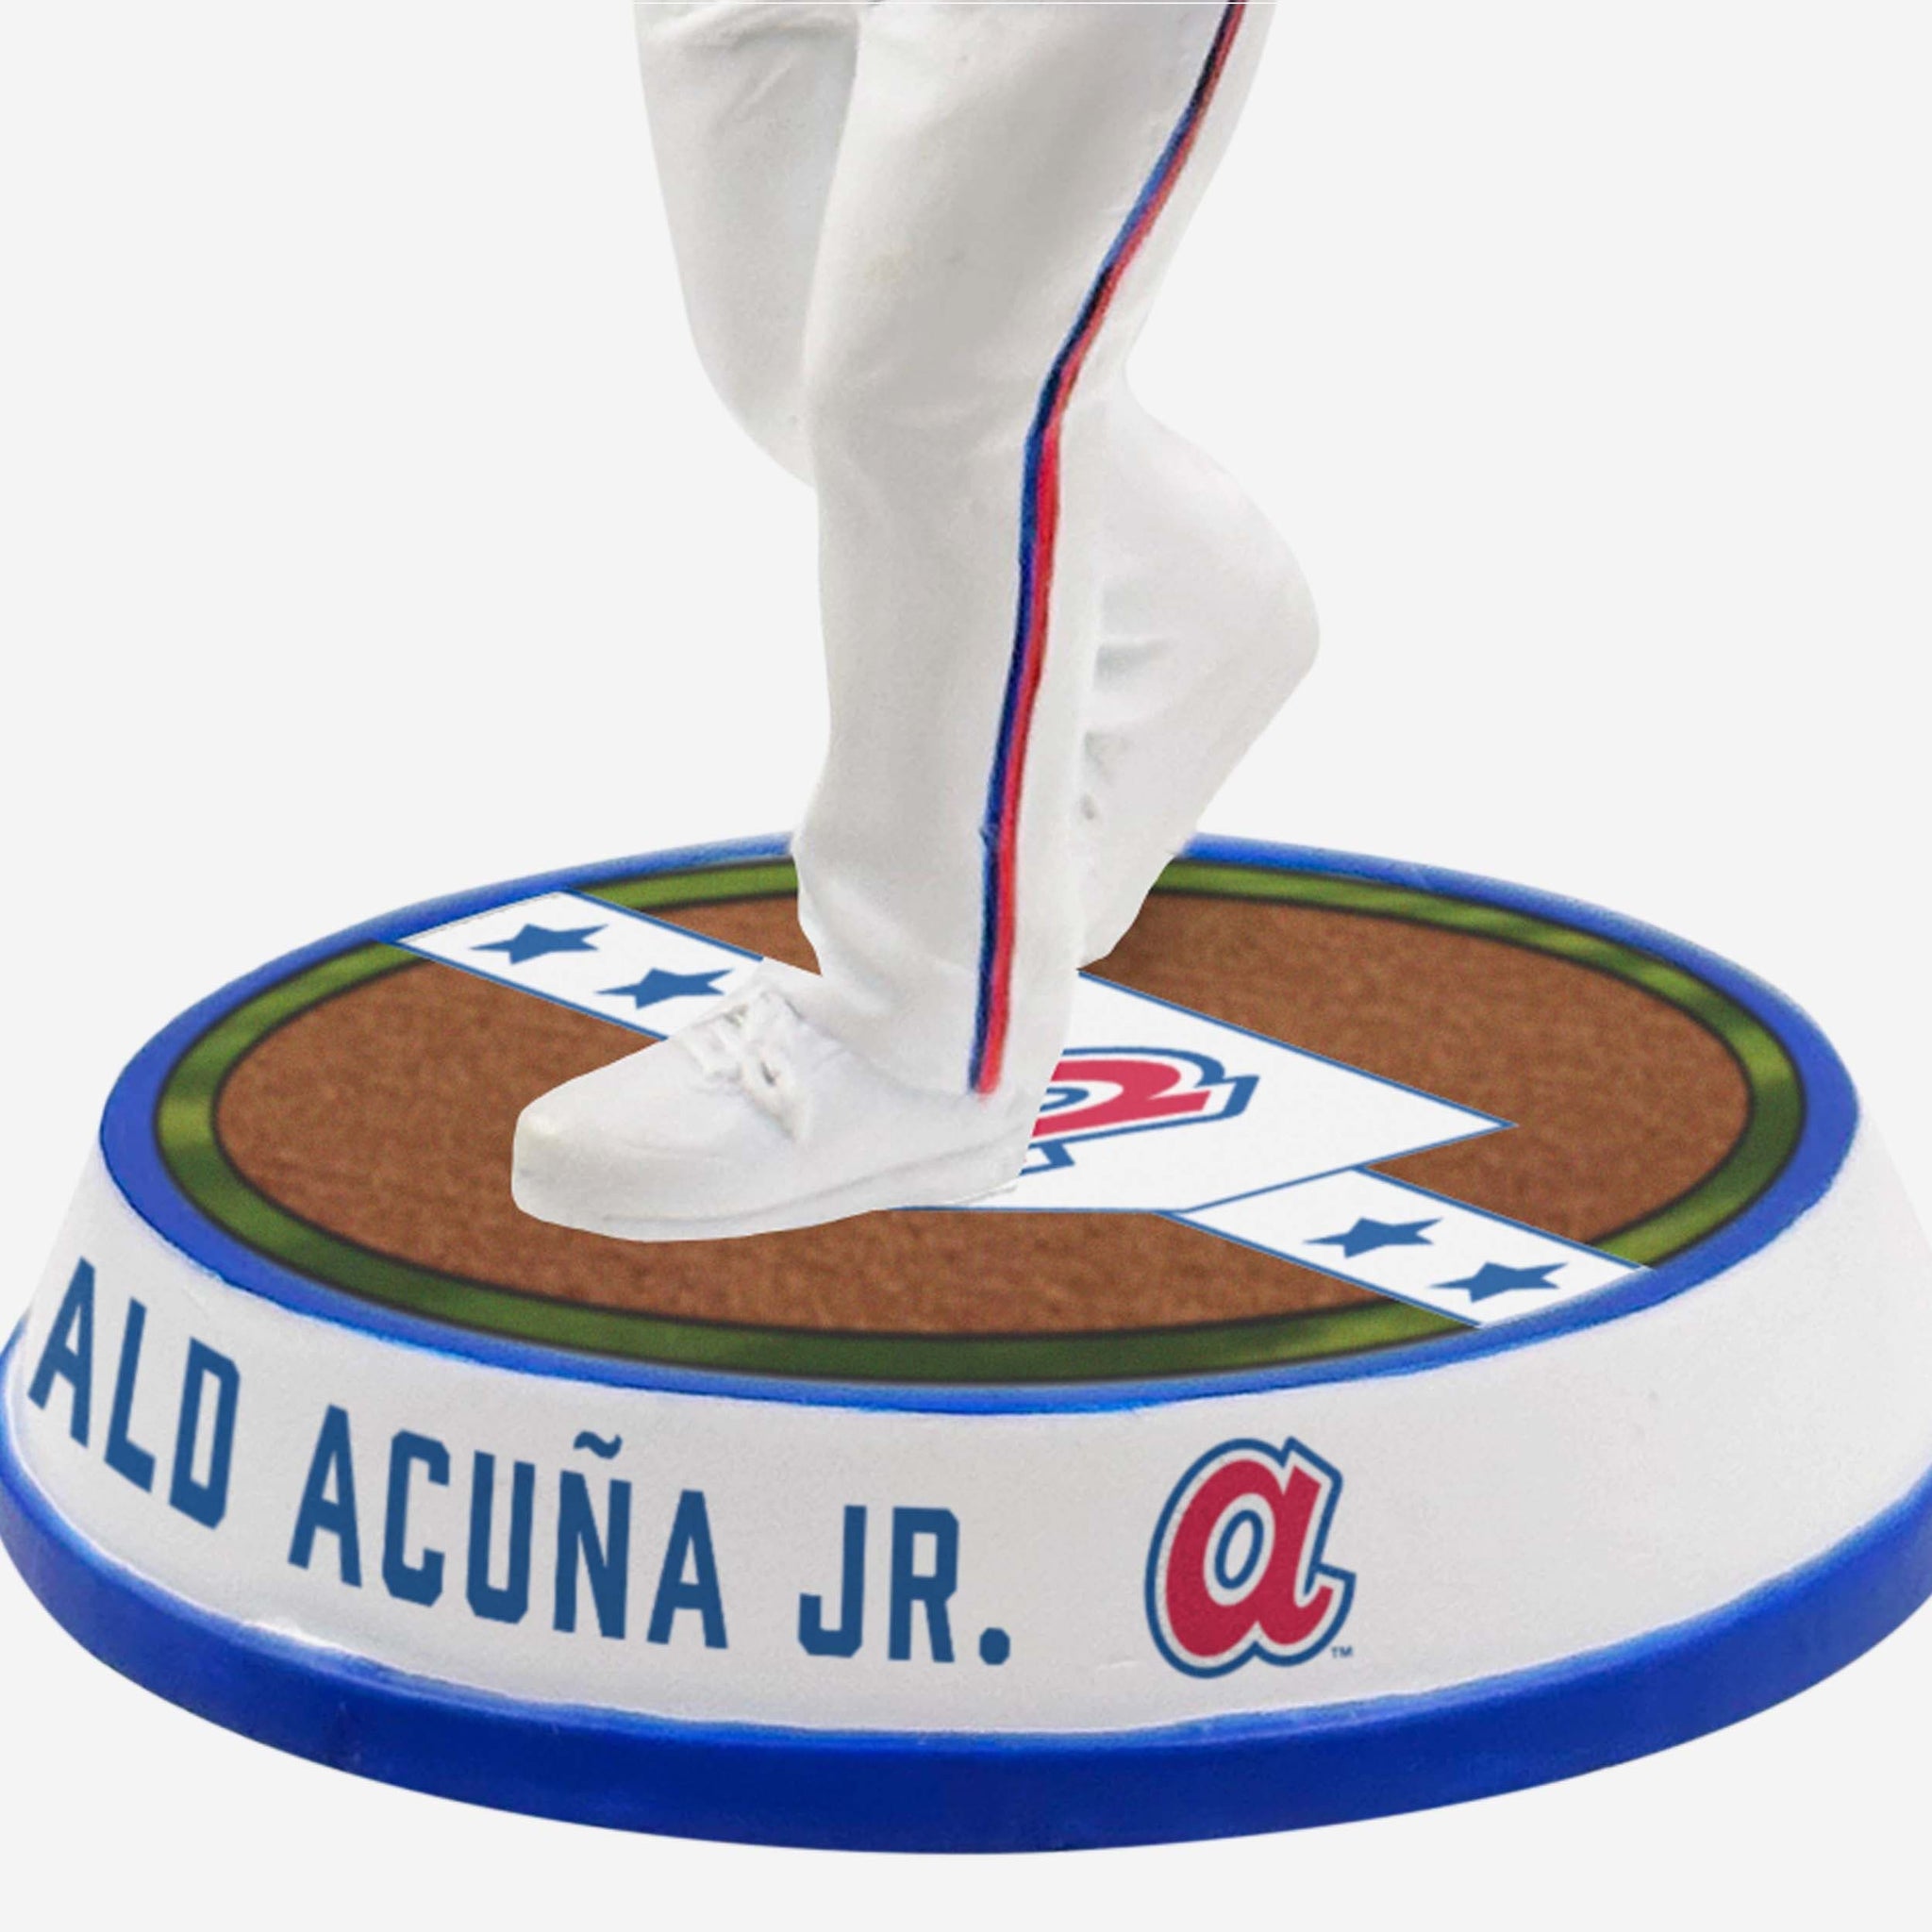 Ronald Acuna Jr. Signed Atlanta Braves Jersey (Throwback)